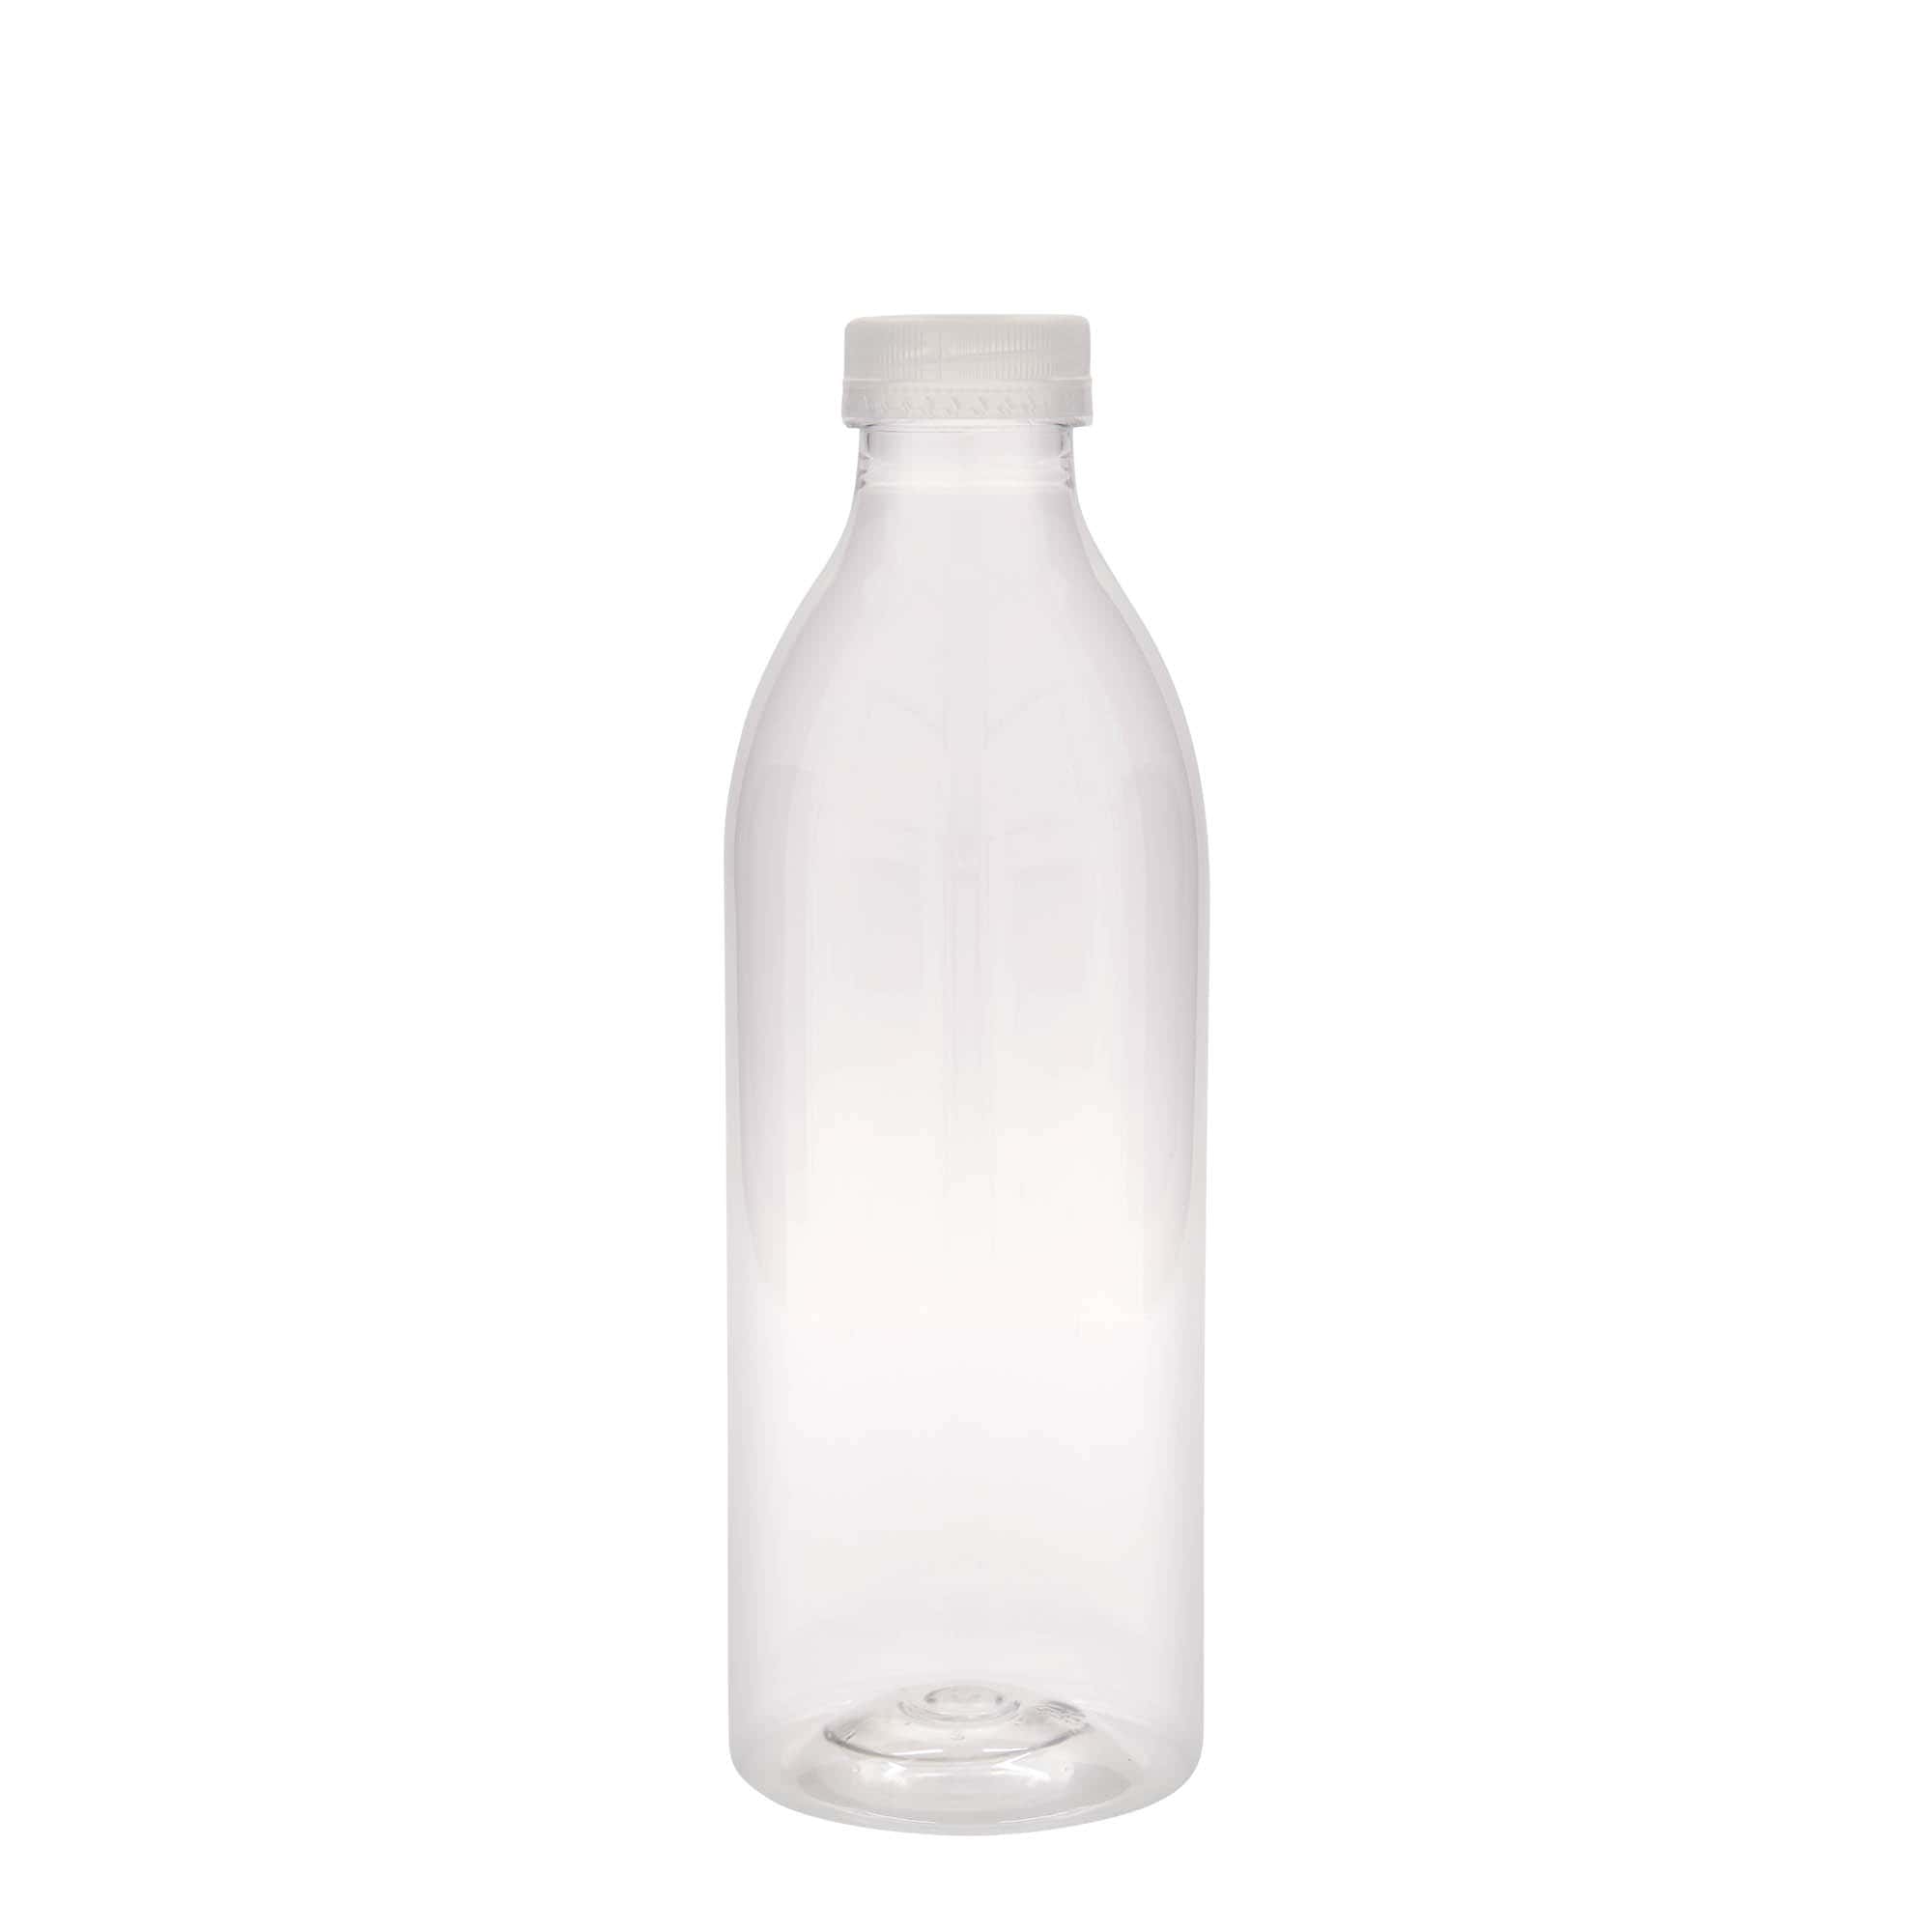 1,000 ml standard PET bottle, plastic, closure: 38 mm